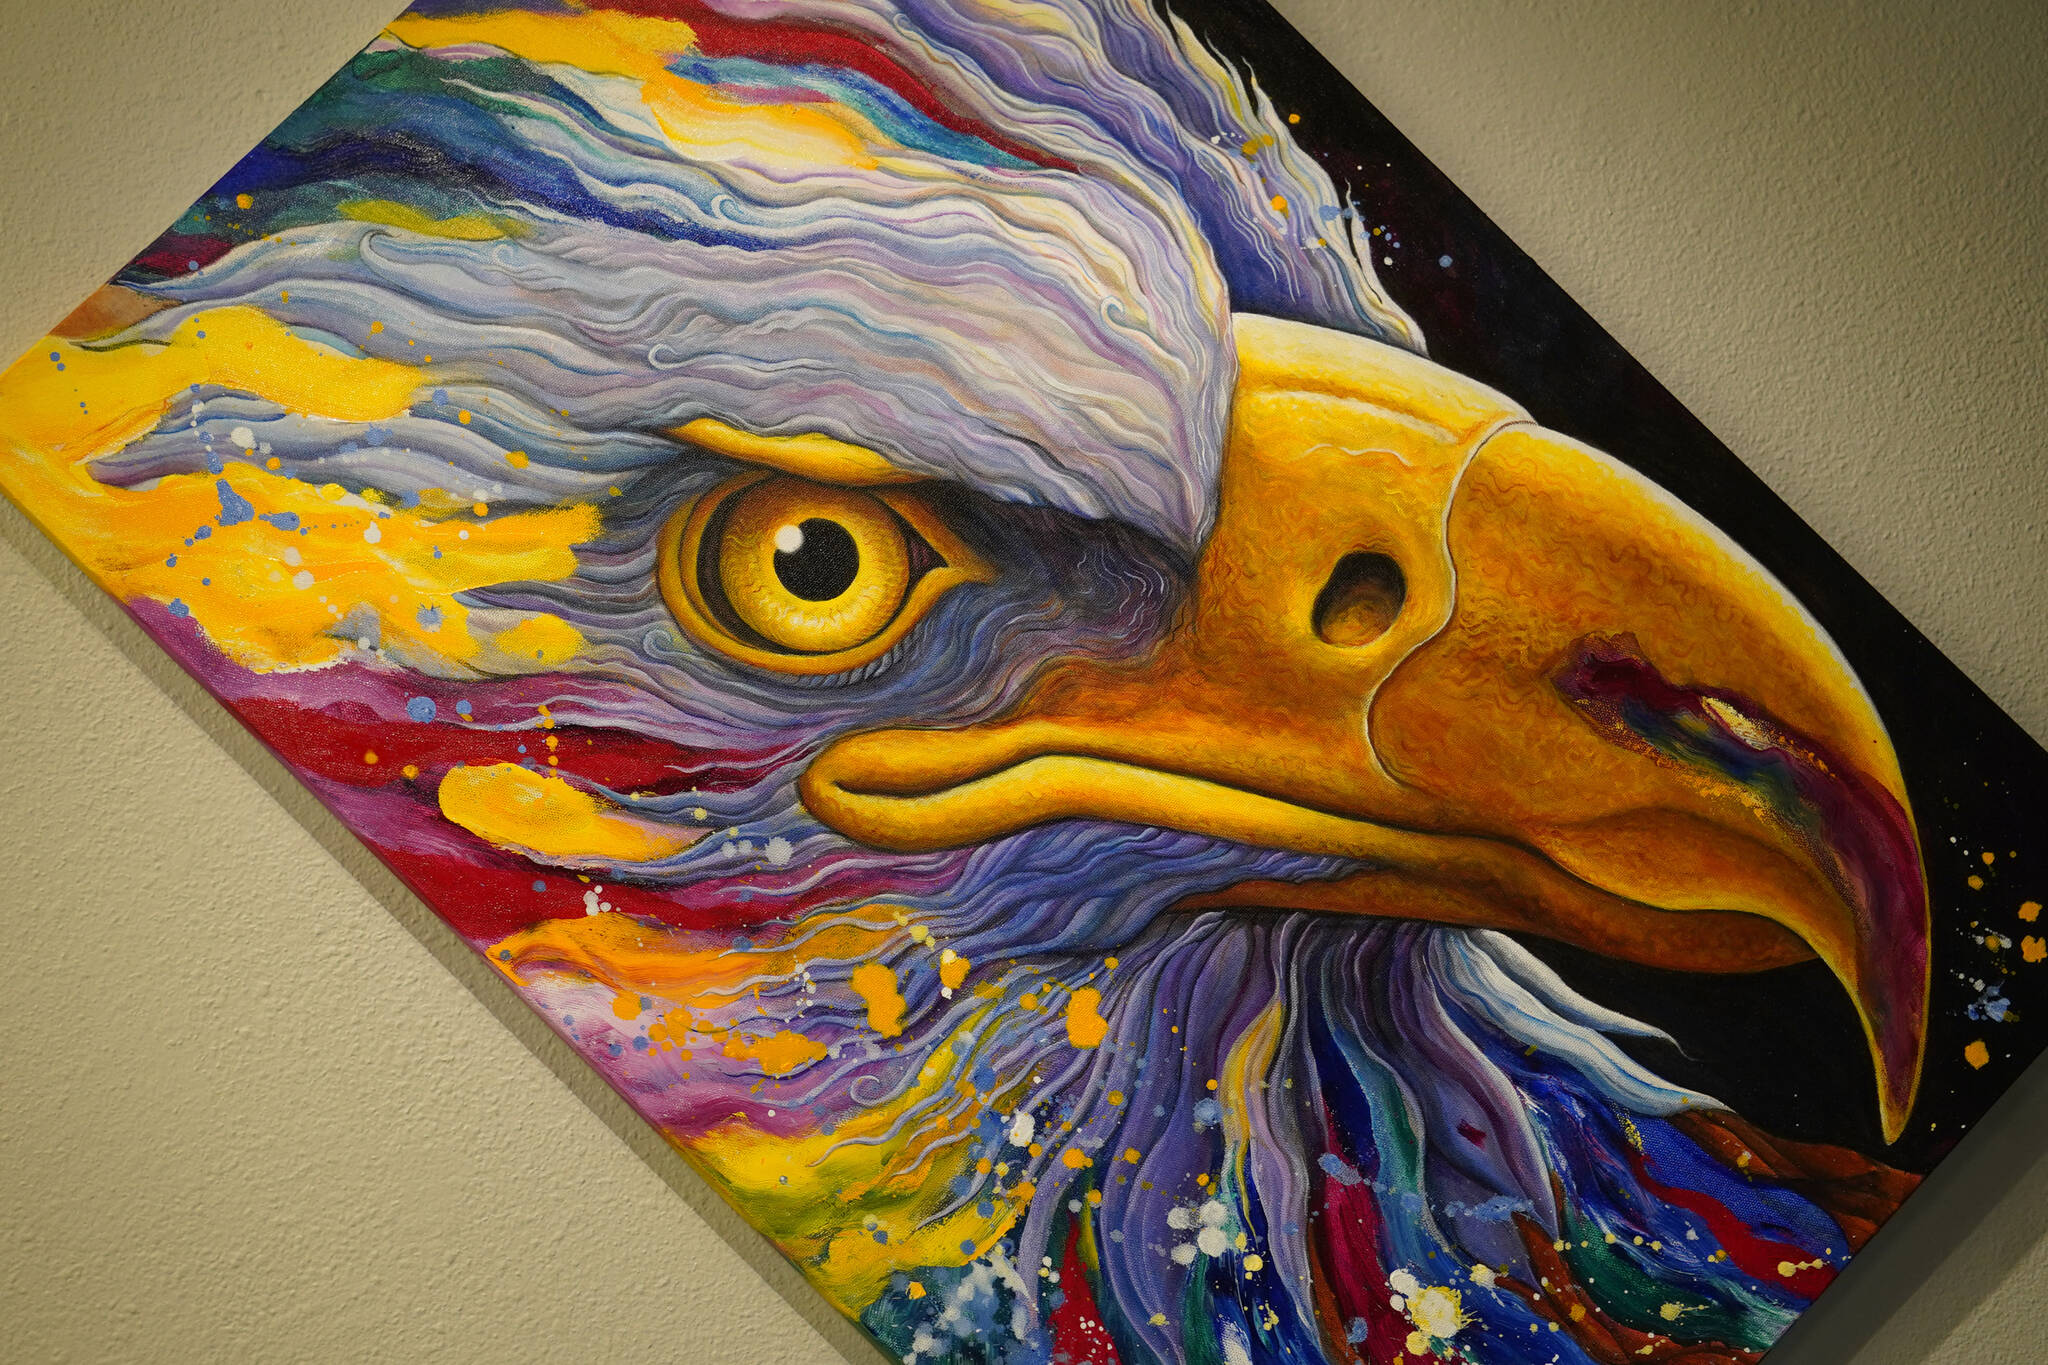 A vibrant painting of an eagle by artist Nathan Perry hangs as part of “Elaborate Expressions” at the Kenai Art Center in Kenai, Alaska on May 3, 2023. (Jake Dye/Peninsula Clarion)